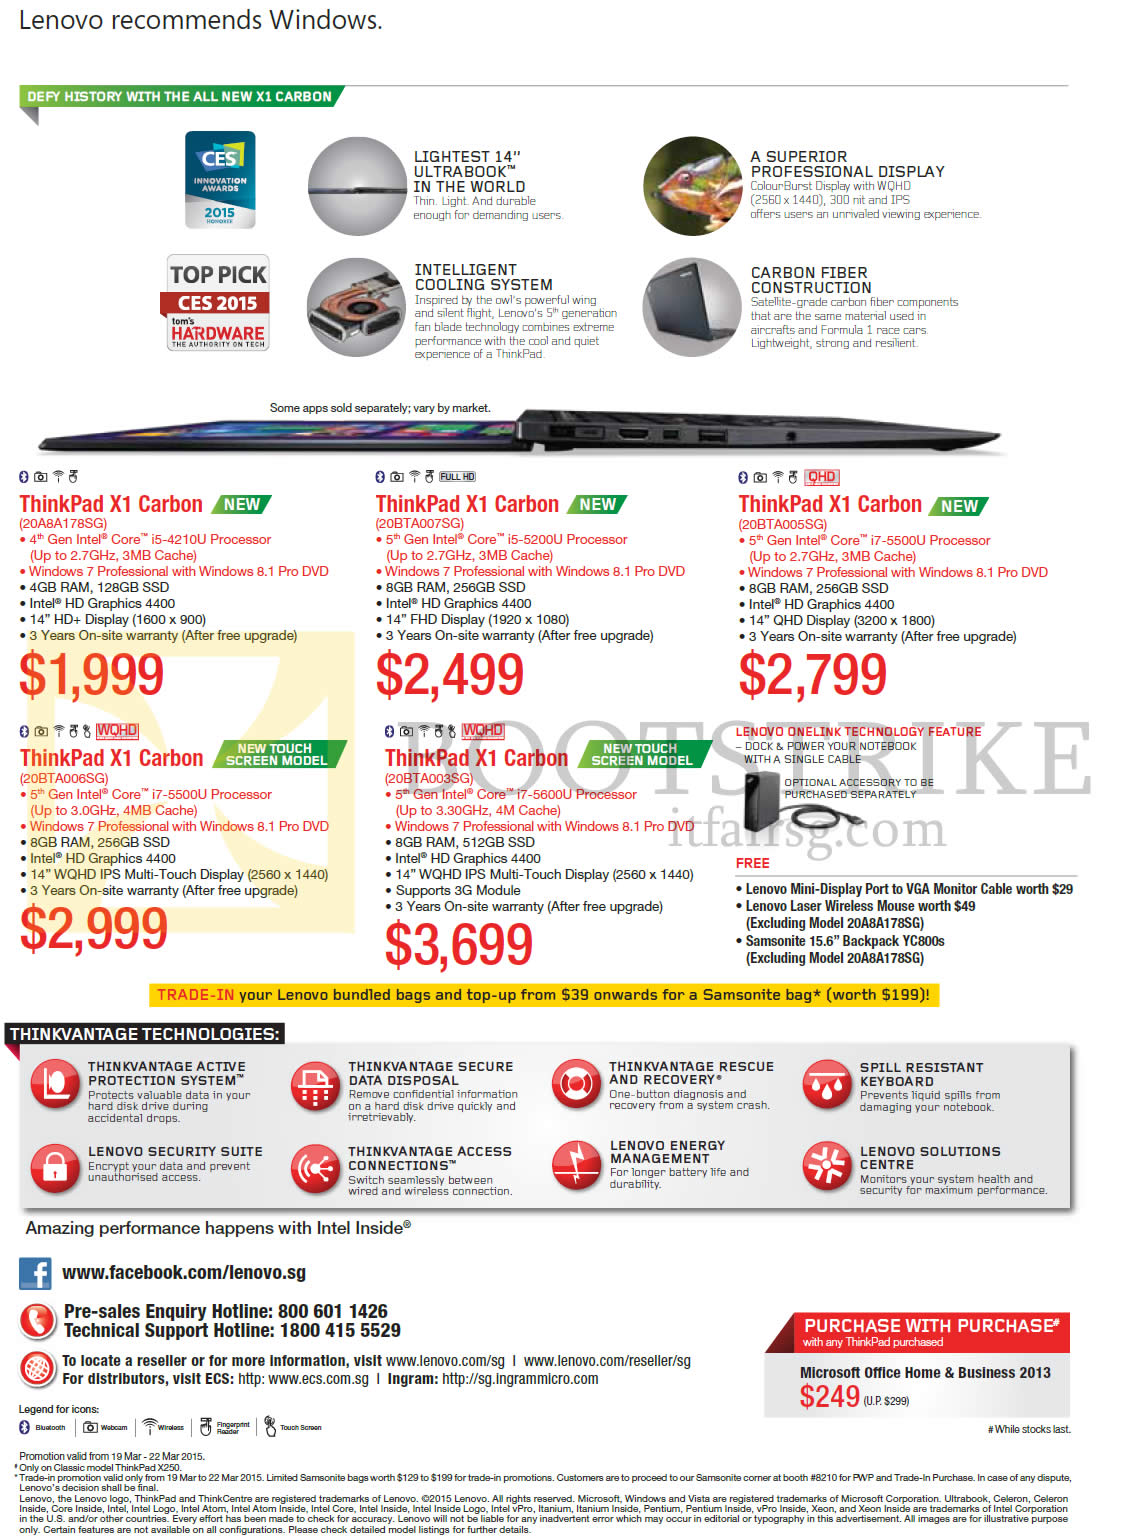 IT SHOW 2015 price list image brochure of Lenovo ThinkPad X1 Carbon Notebooks